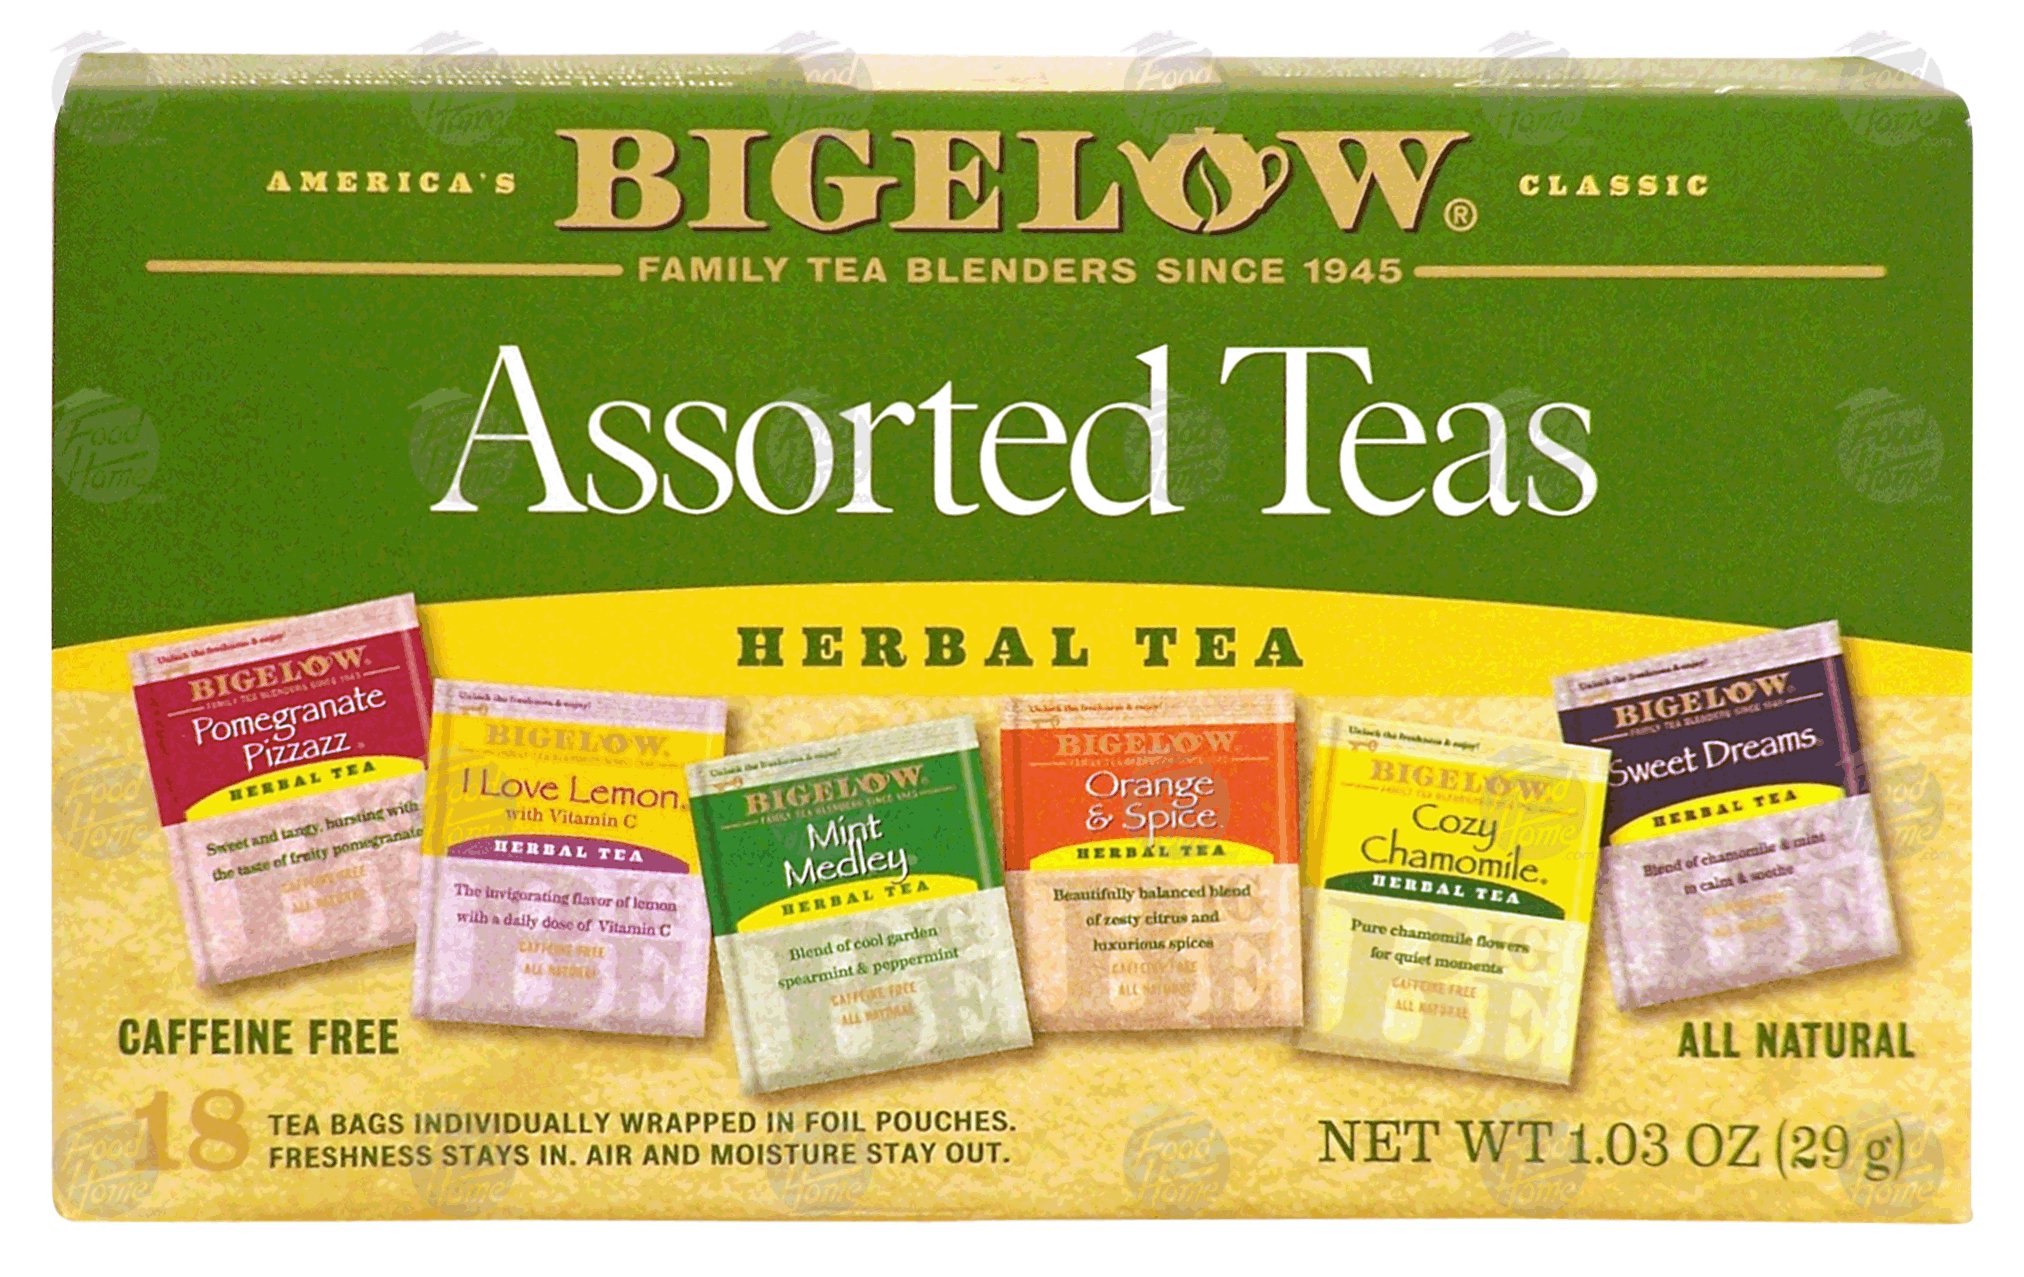 Bigelow  assorted teas, herbal tea Full-Size Picture